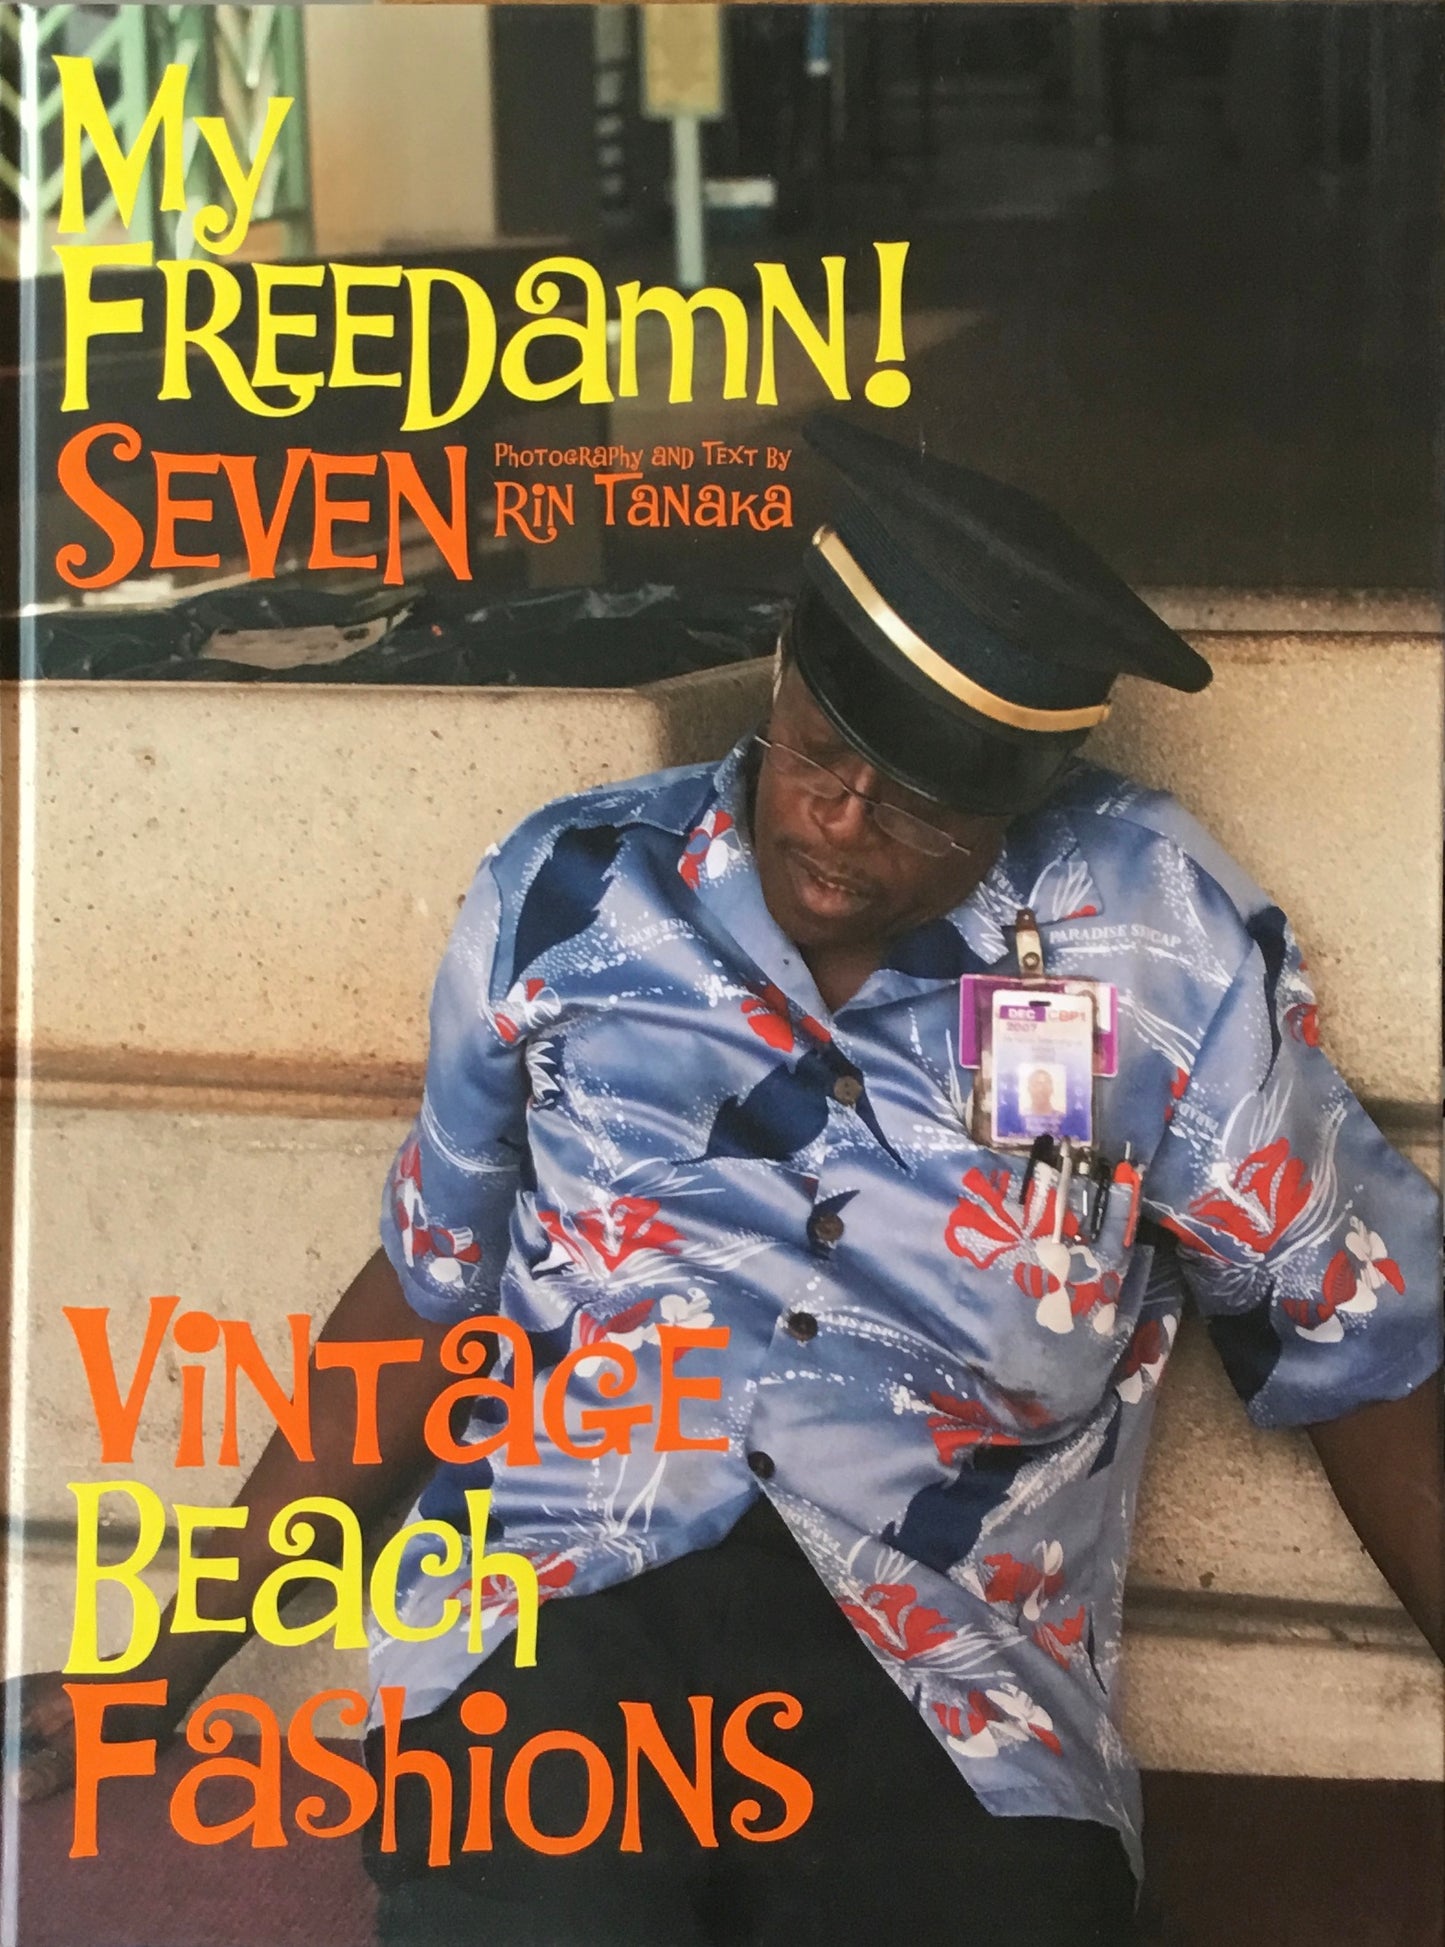 My Freedamn! 7 Vintage Beach Fashions Rin Tanaka